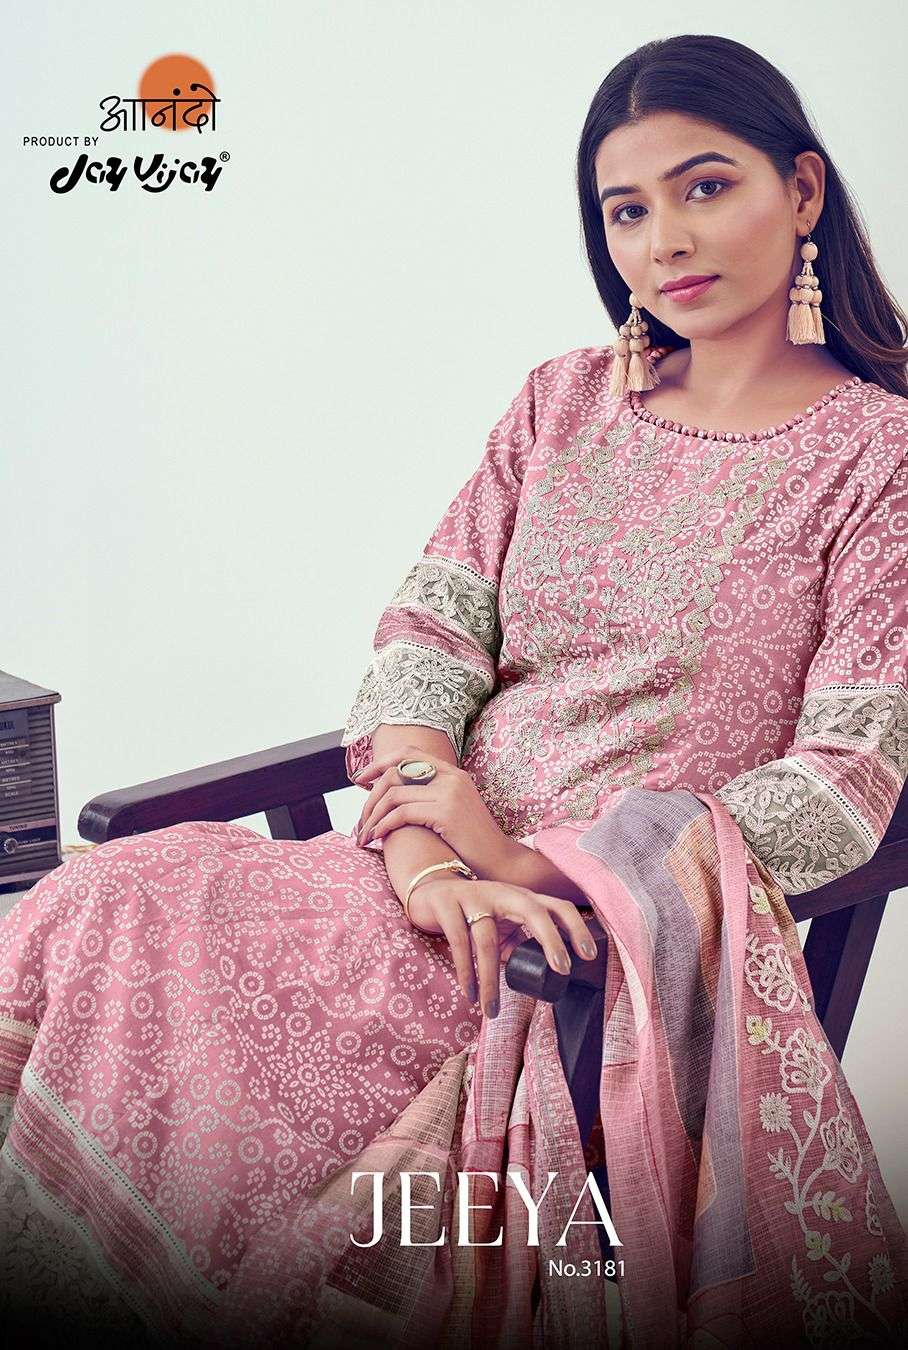 Jay Vijay Aanando Jeeya 3181 Fancy Block Designs Cotton Suit New Collection